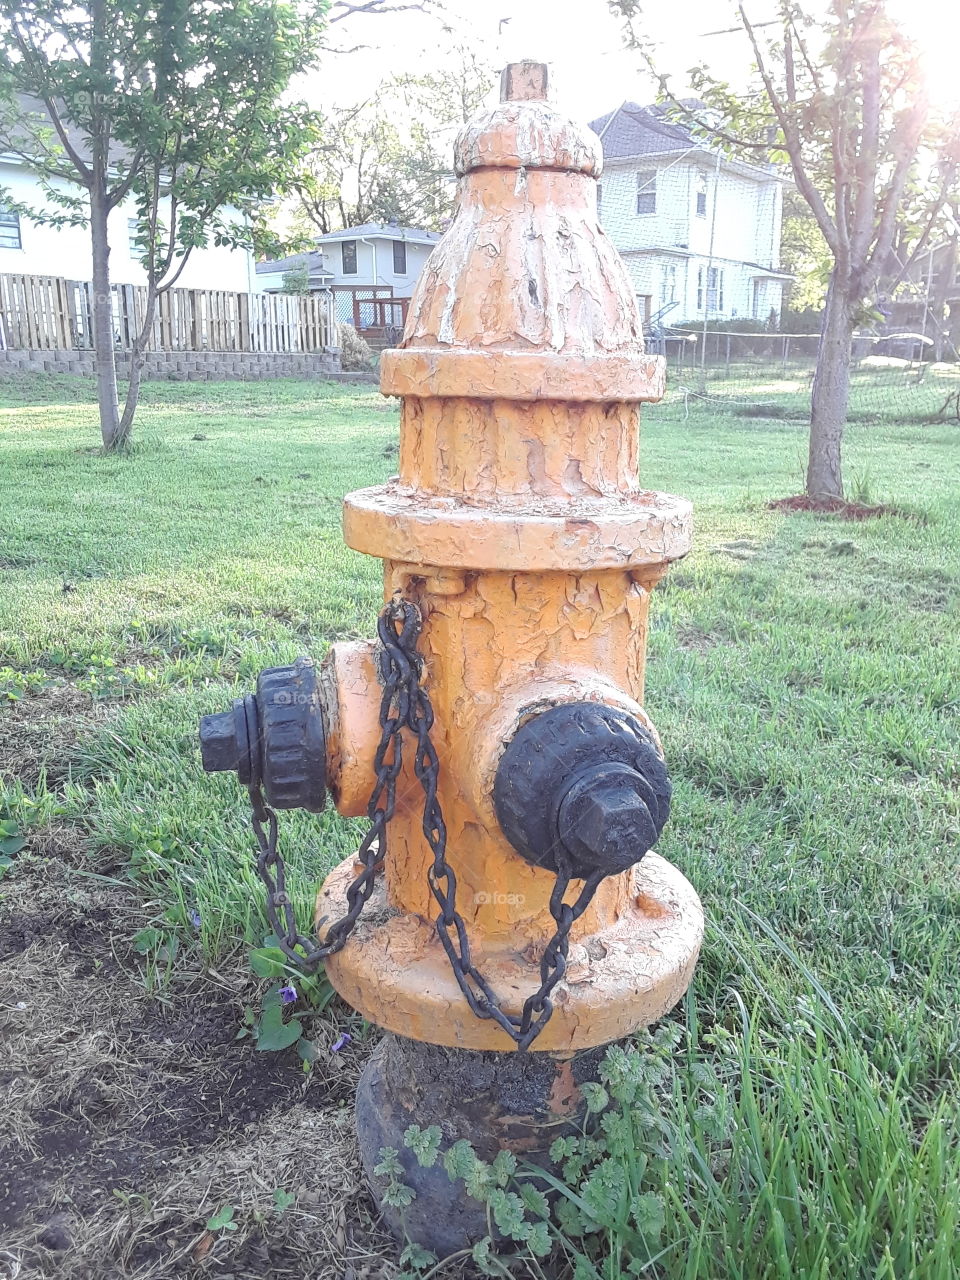 Orange Fire Hydrant in yard